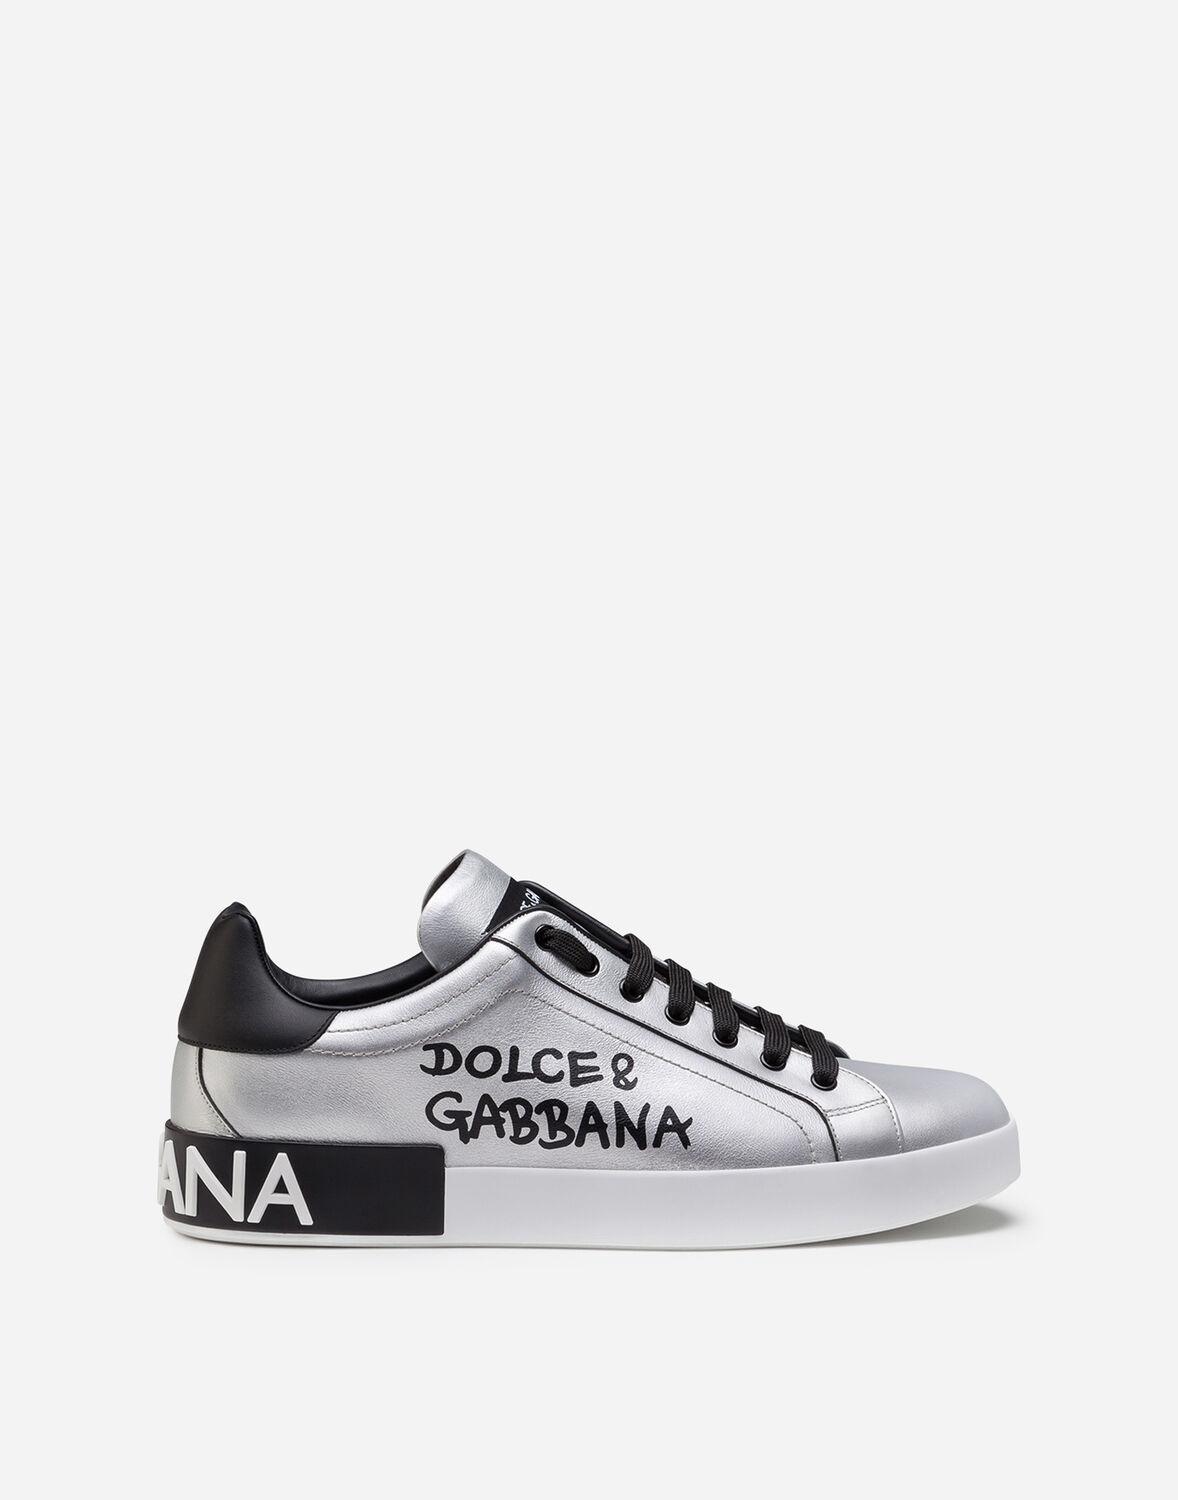 Dolce & Gabbana Metallic Calfskin Nappa Portofino Sneakers for Men - Lyst